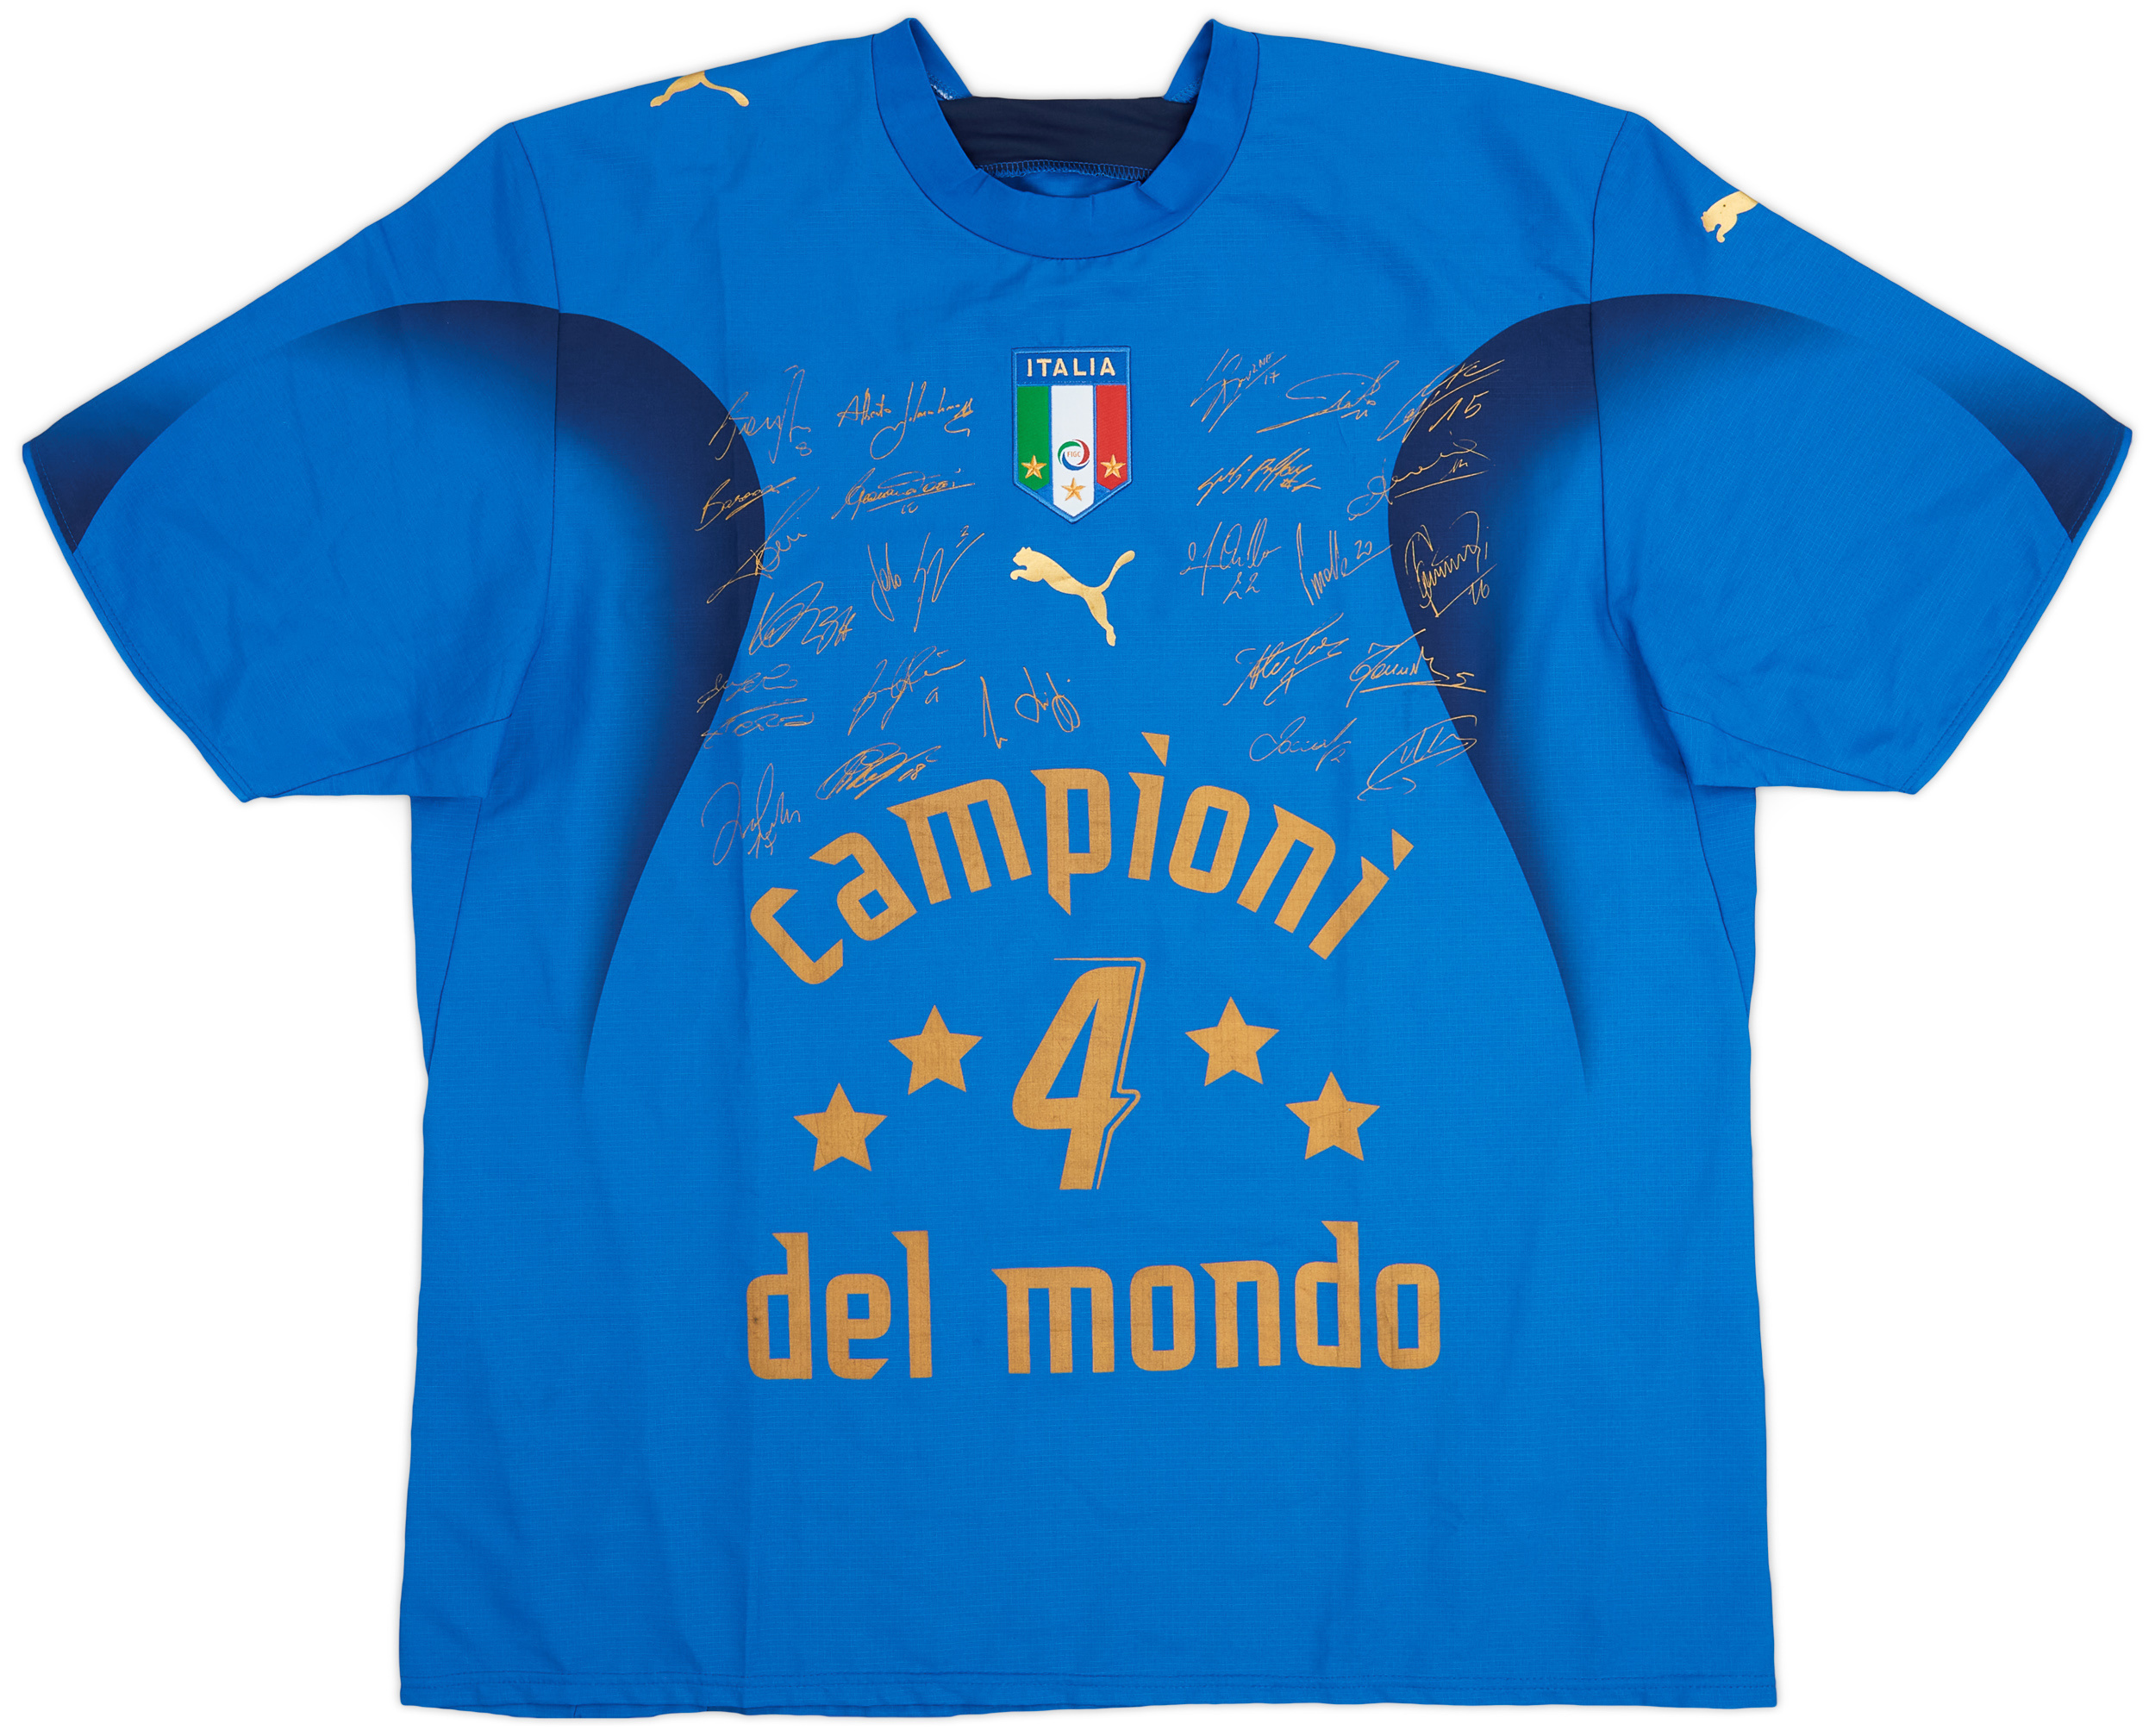 2006 Italy 'Campioni Del Mondo' 'Signed' Home Shirt - 8/10 - ()